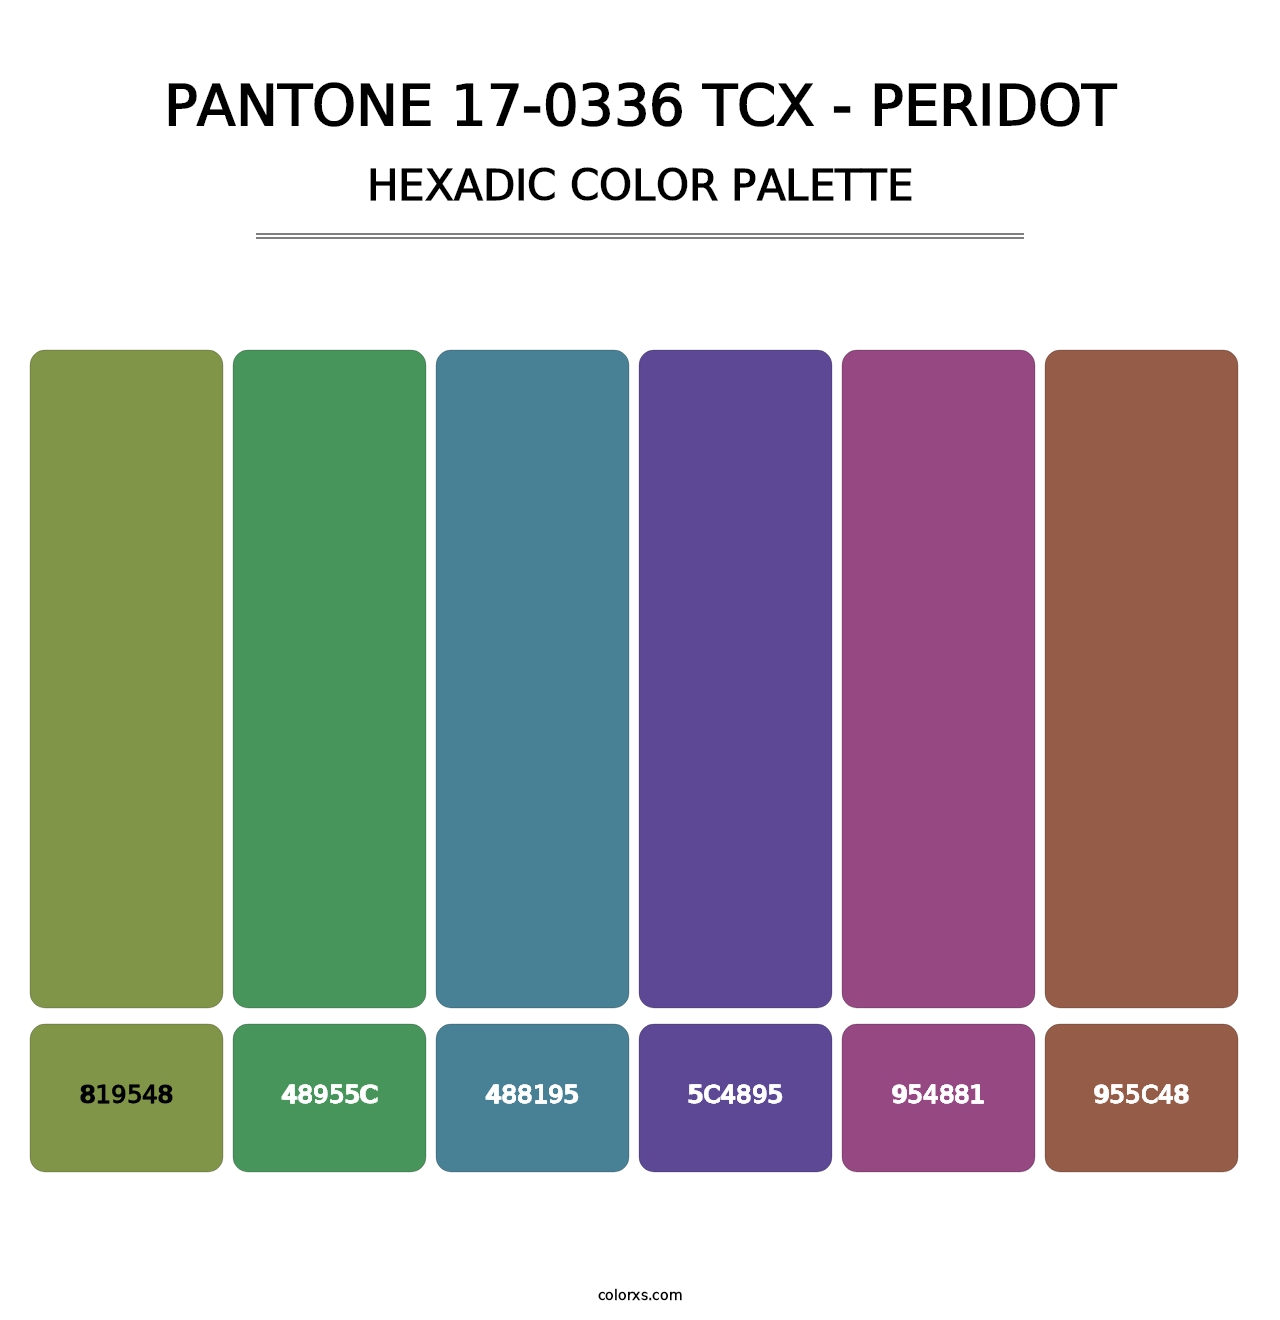 PANTONE 17-0336 TCX - Peridot - Hexadic Color Palette